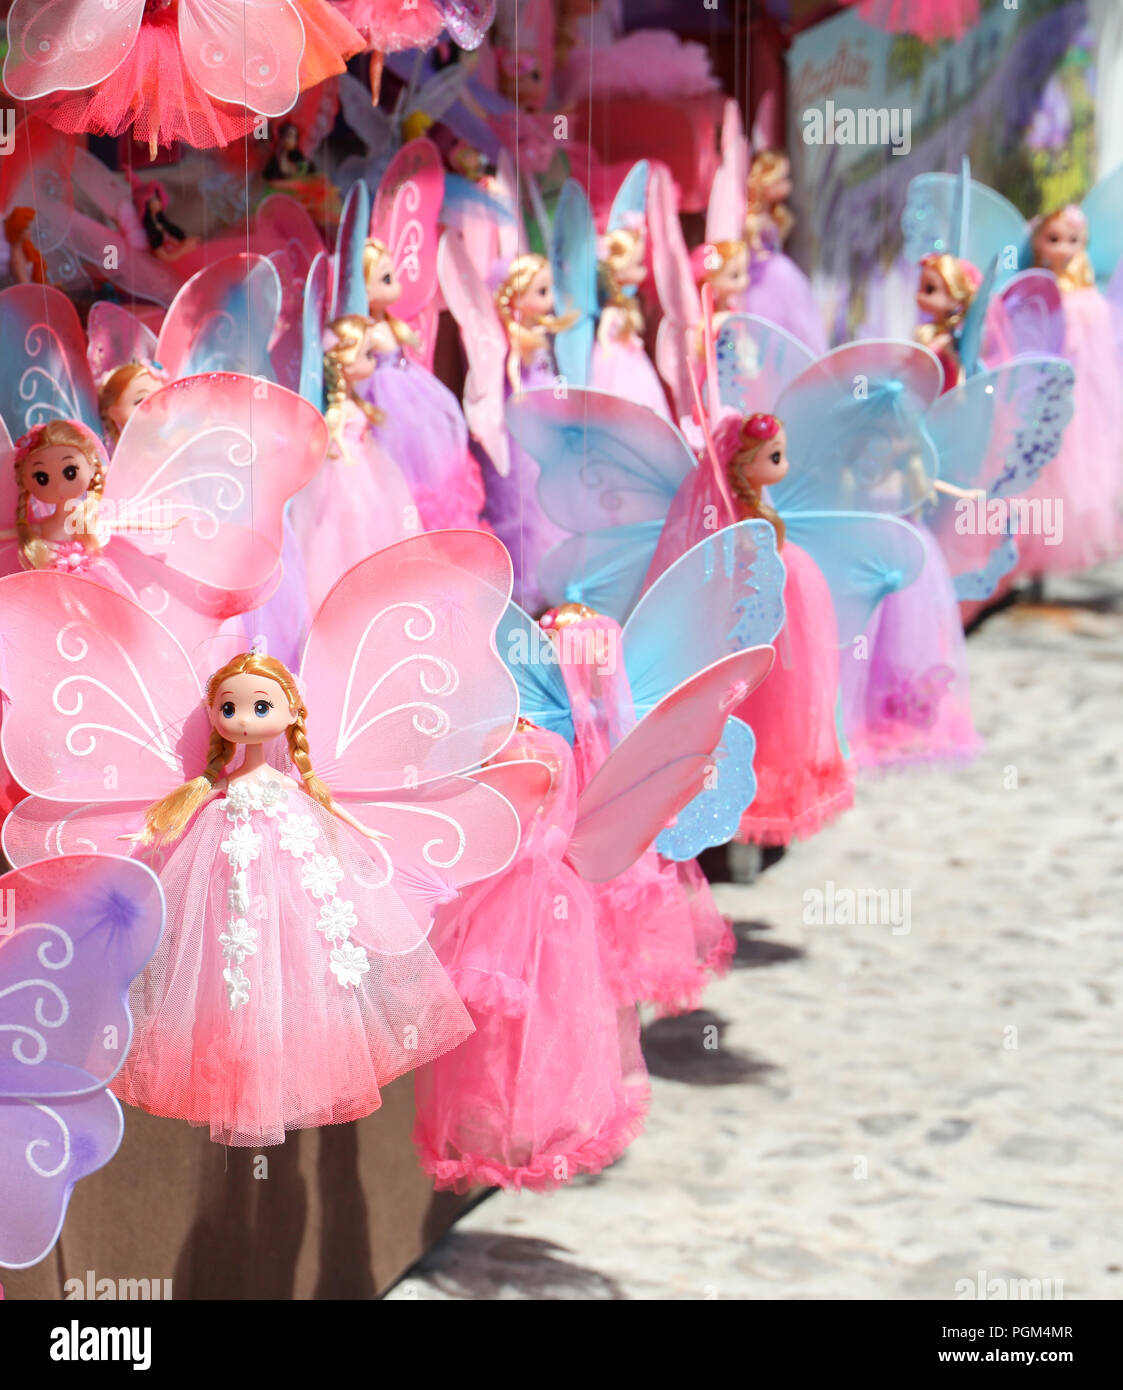 Angel dolls display Stock Photo